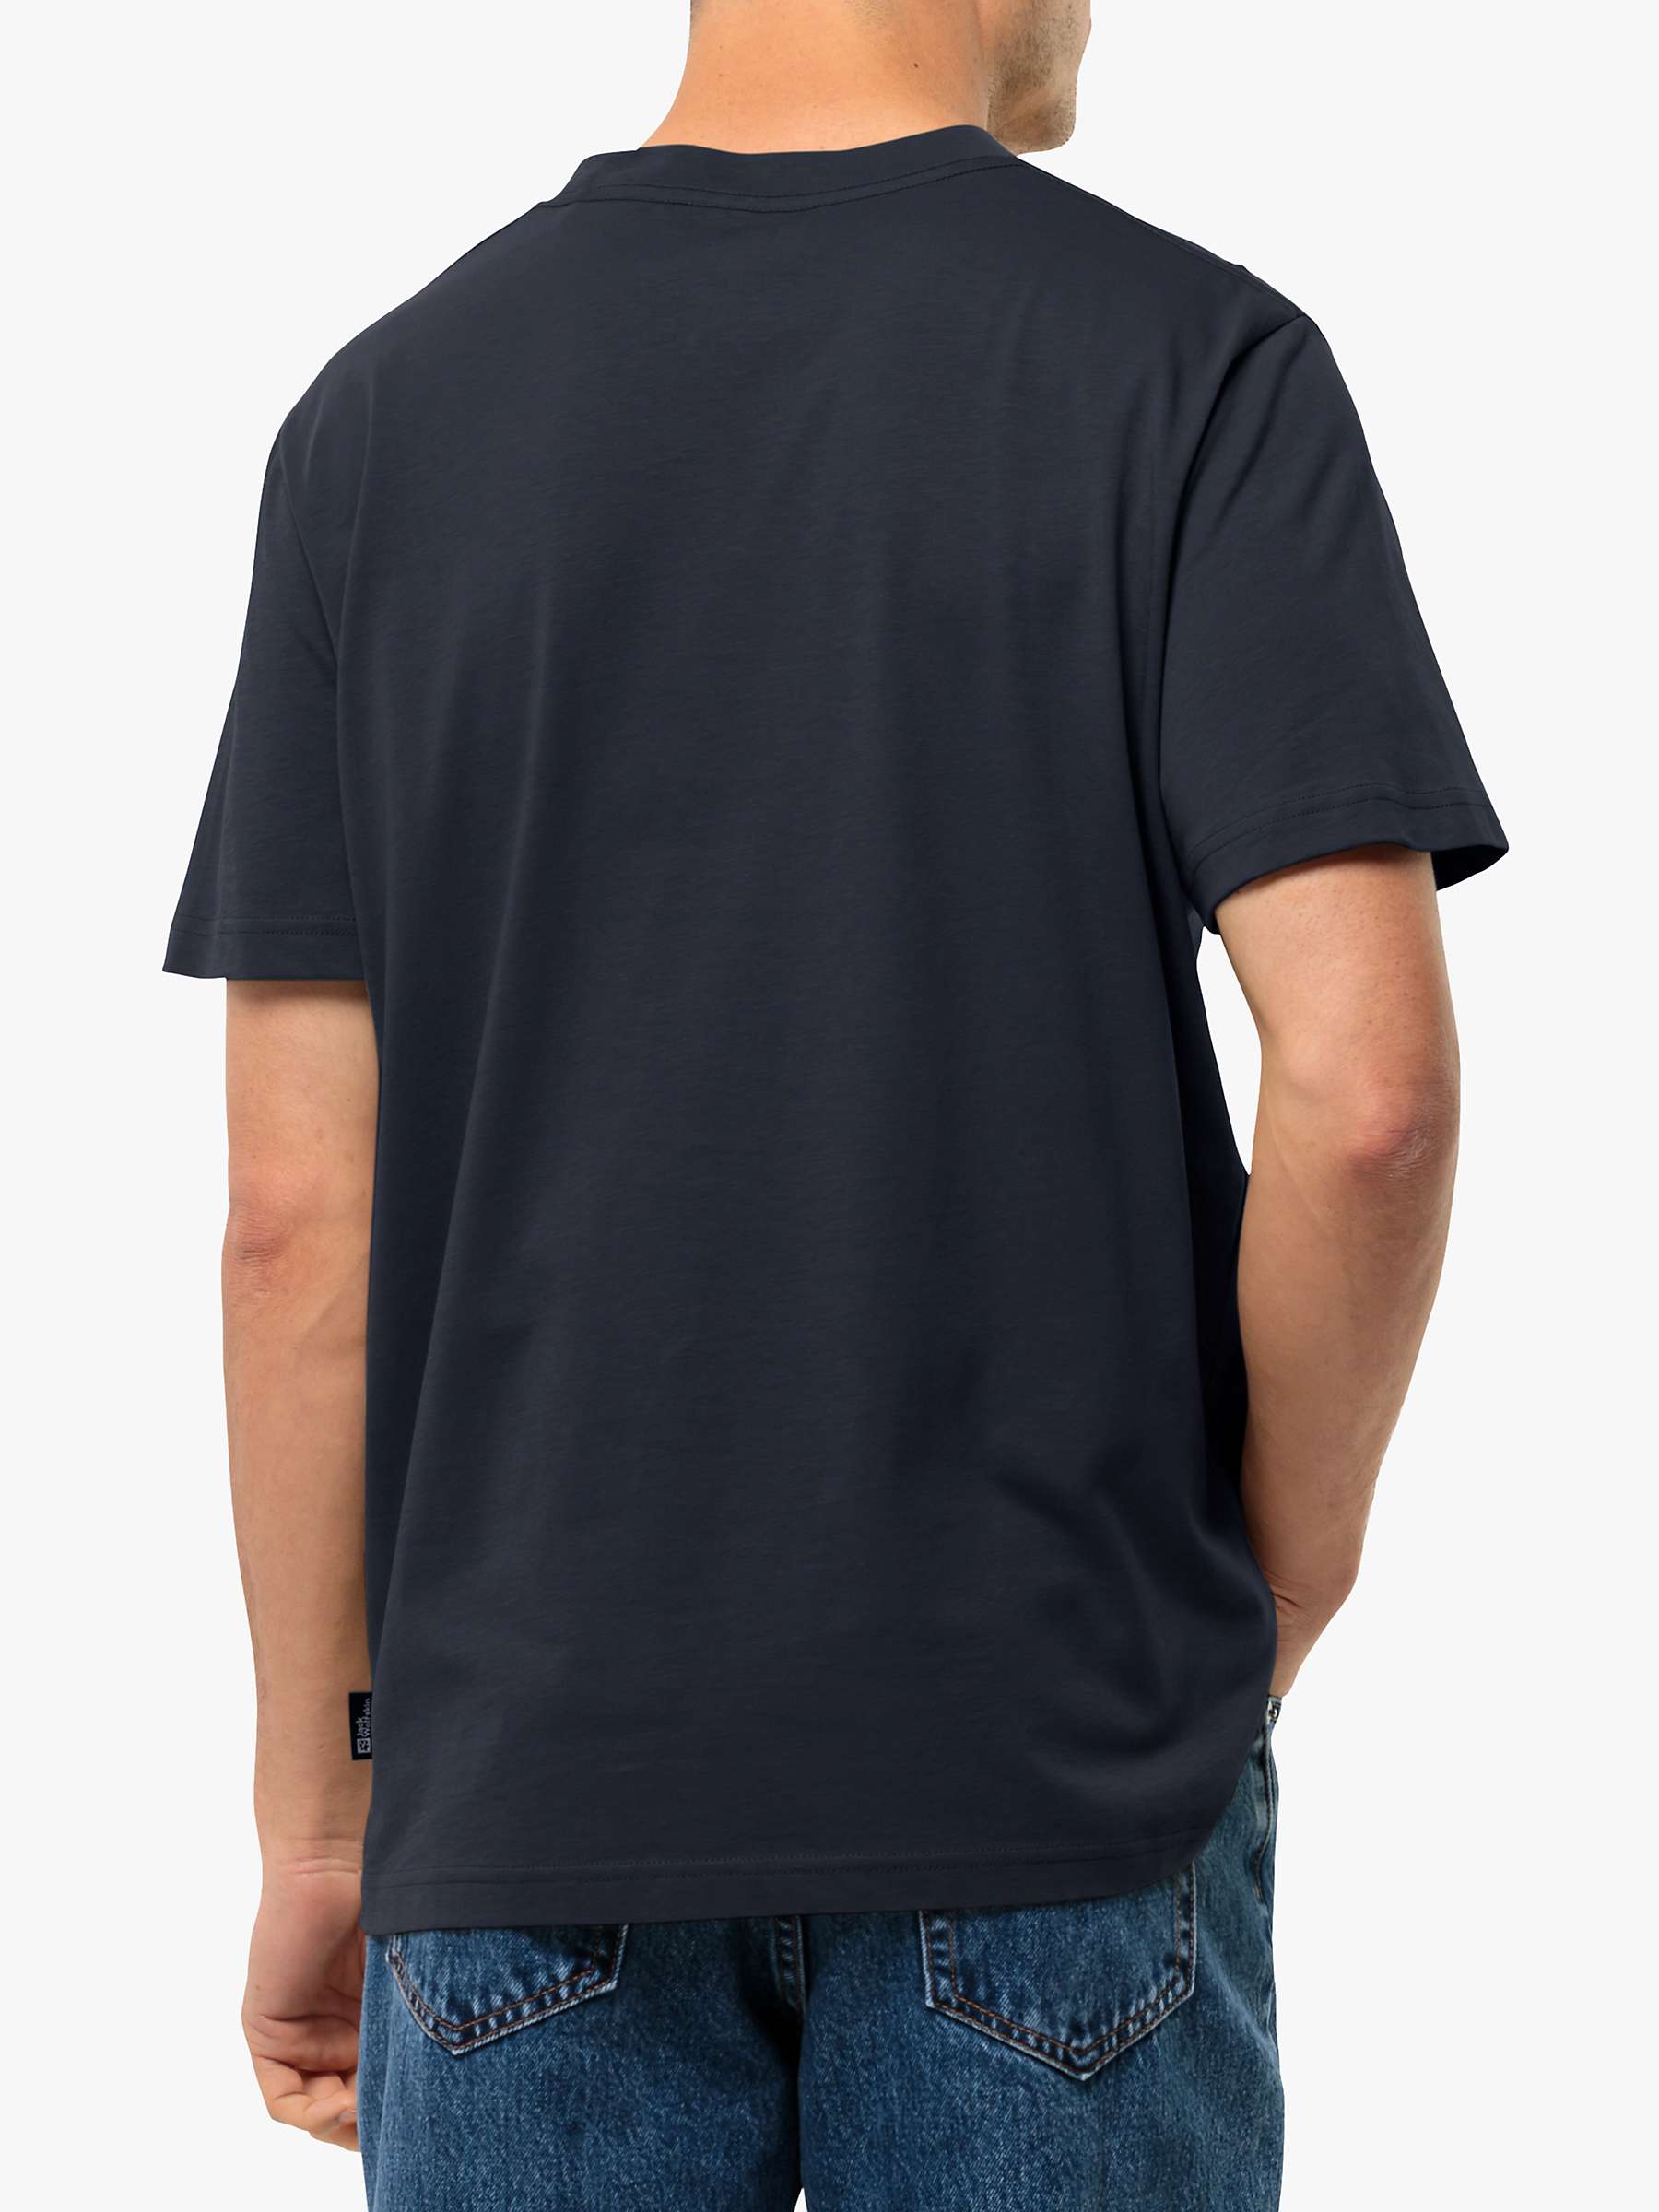 Buy Jack Wolfskin Tent T-Shirt, Night Blue Online at johnlewis.com